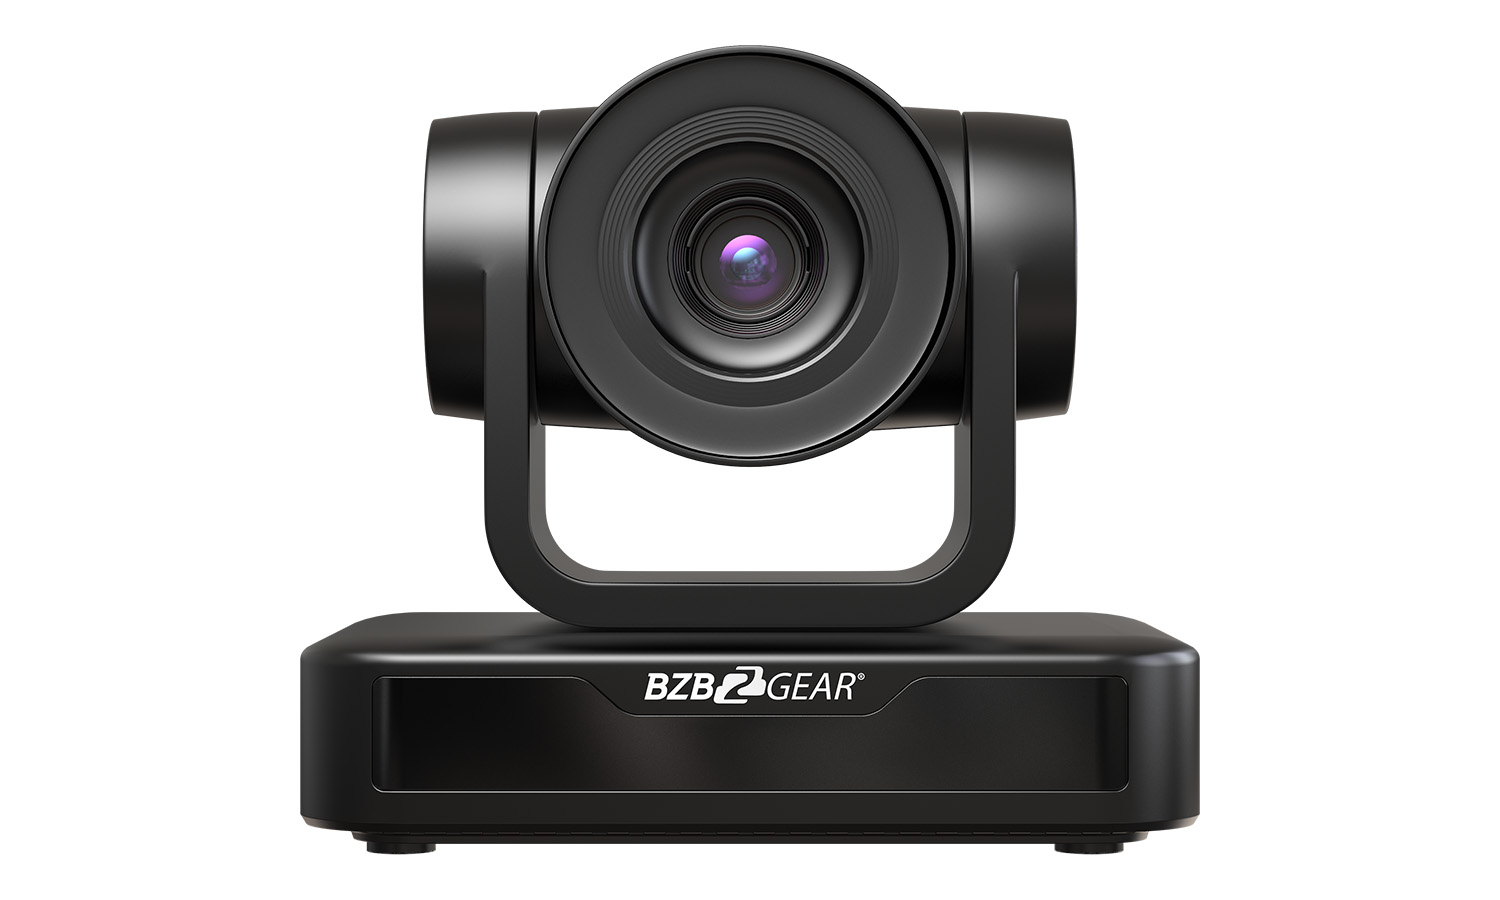 BG-BPTZ-3XU Essential 1080P Full HD 3X USB 2.0/RS232 Huddle/Conference Room PTZ Camera by BZBGEAR